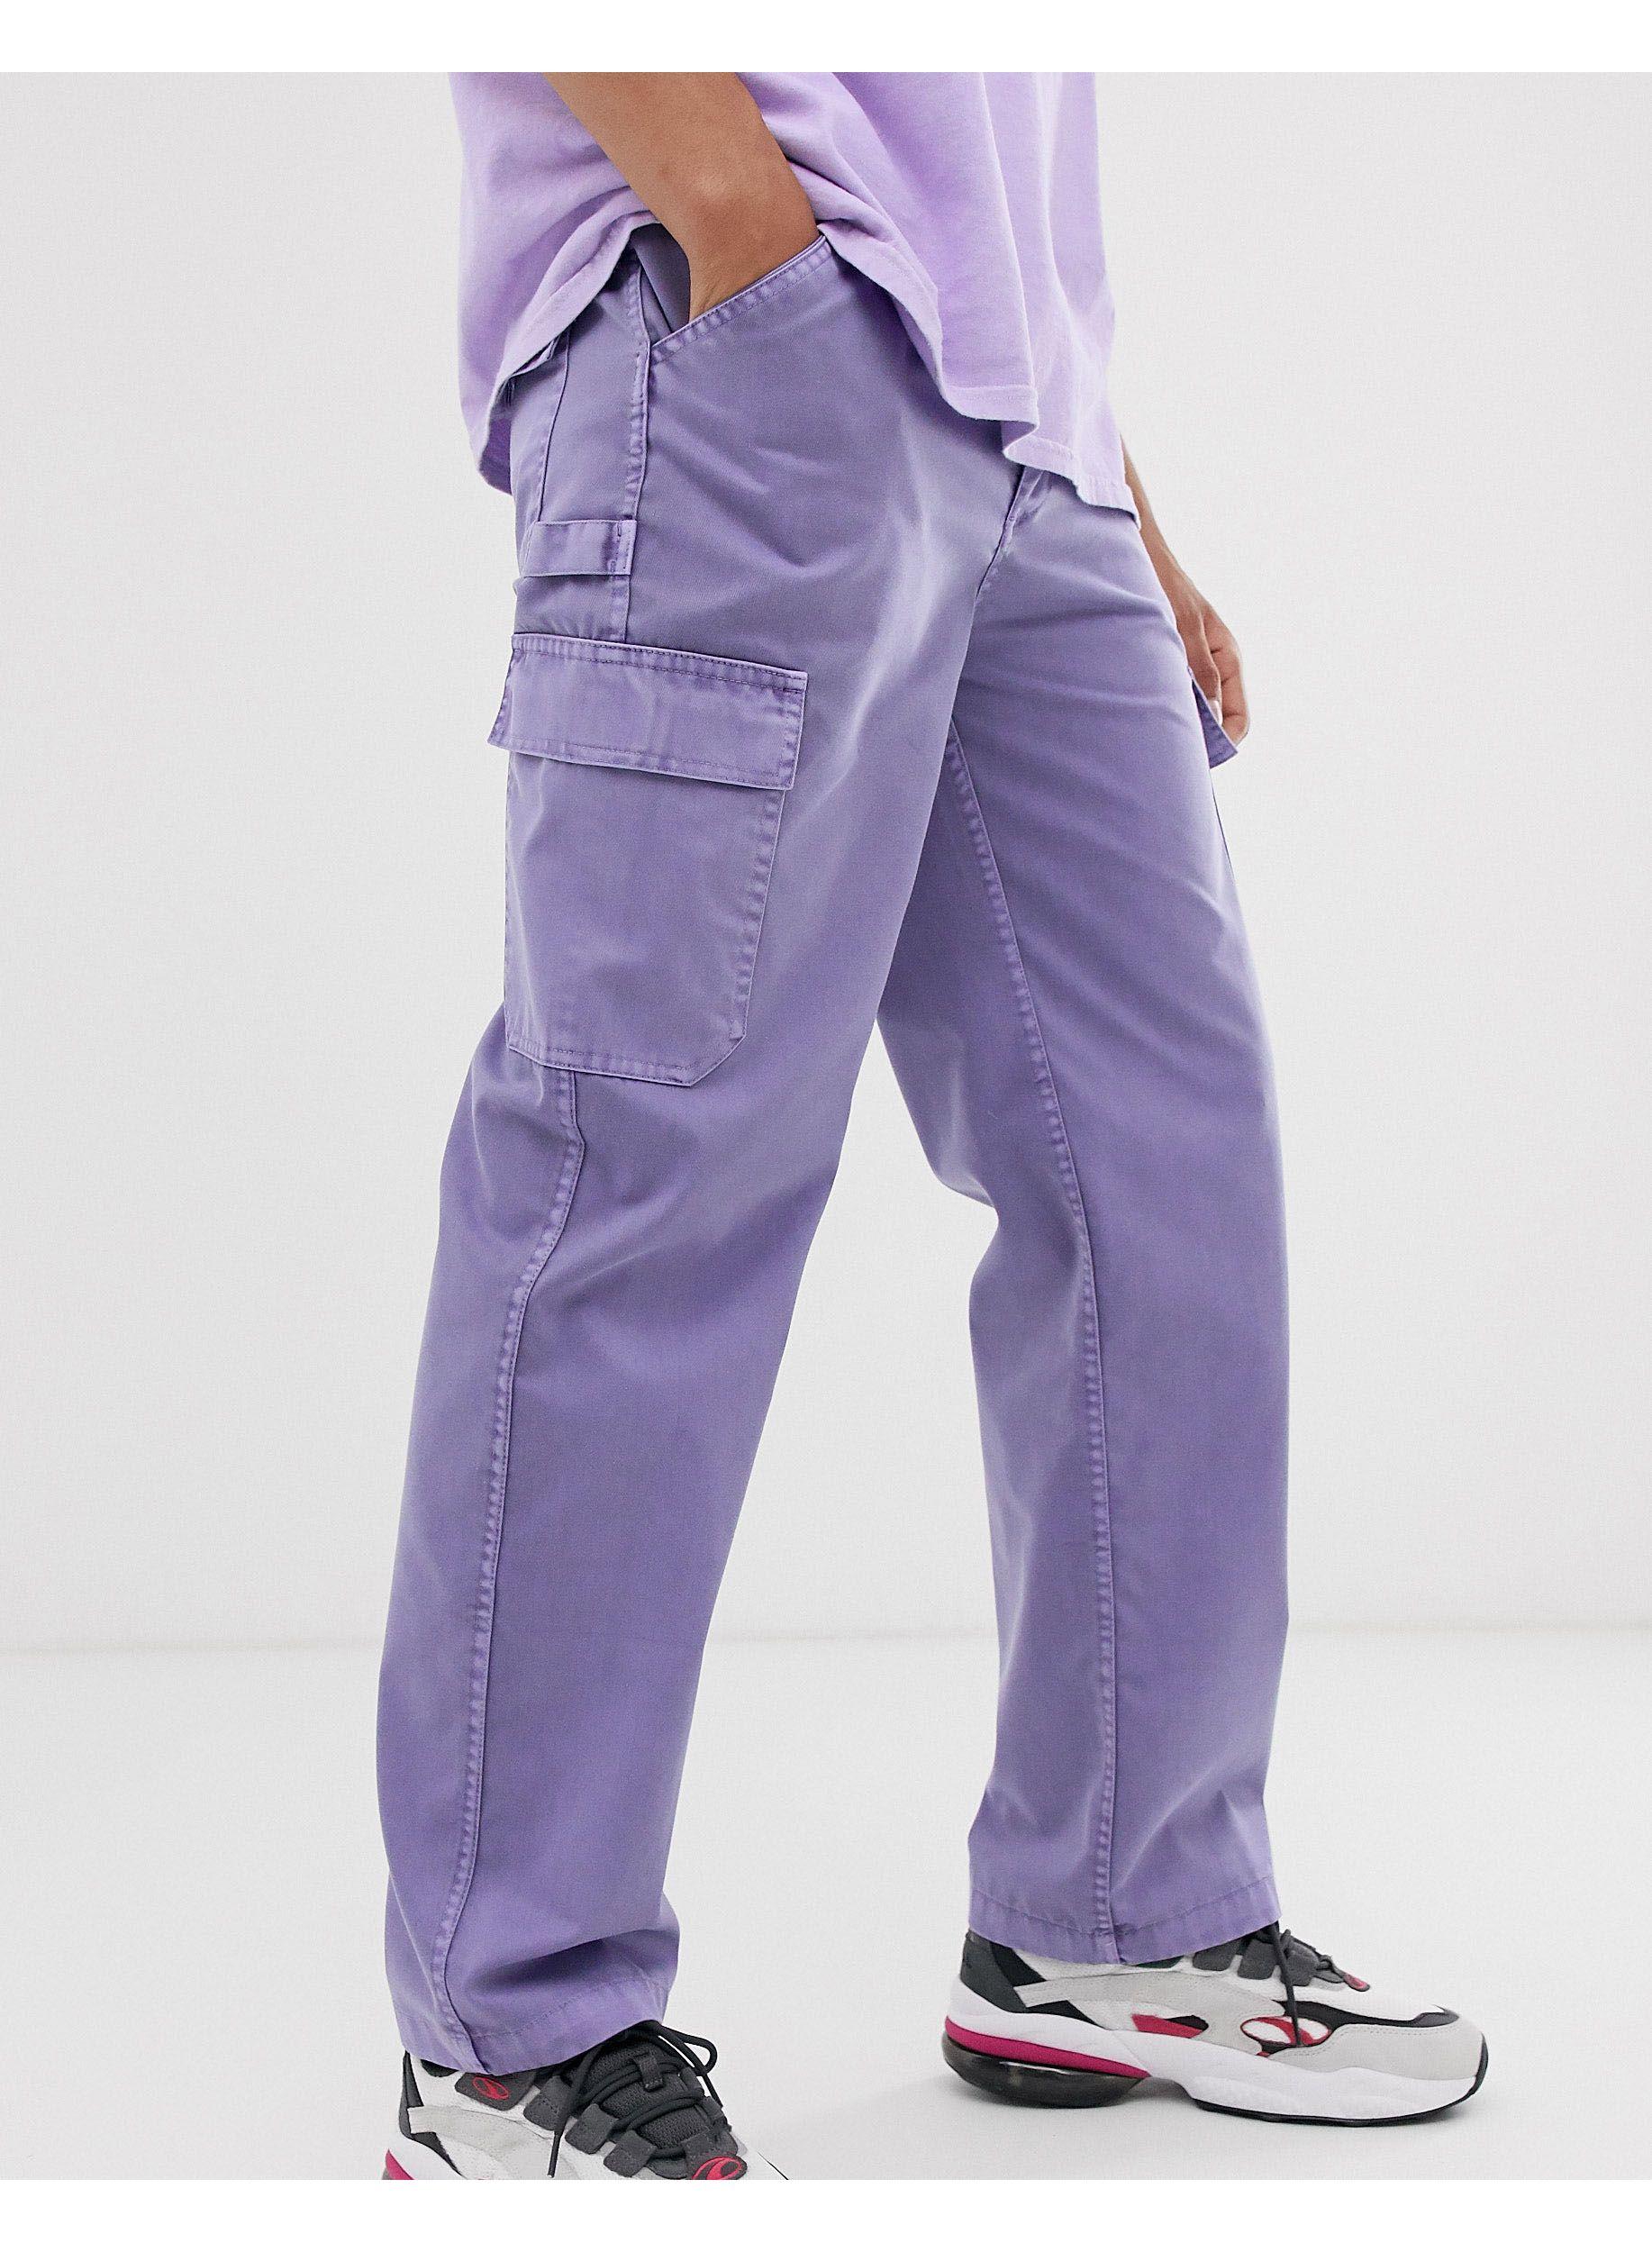 Zara - Tie-Dye Cargo Pants - Violet - Men